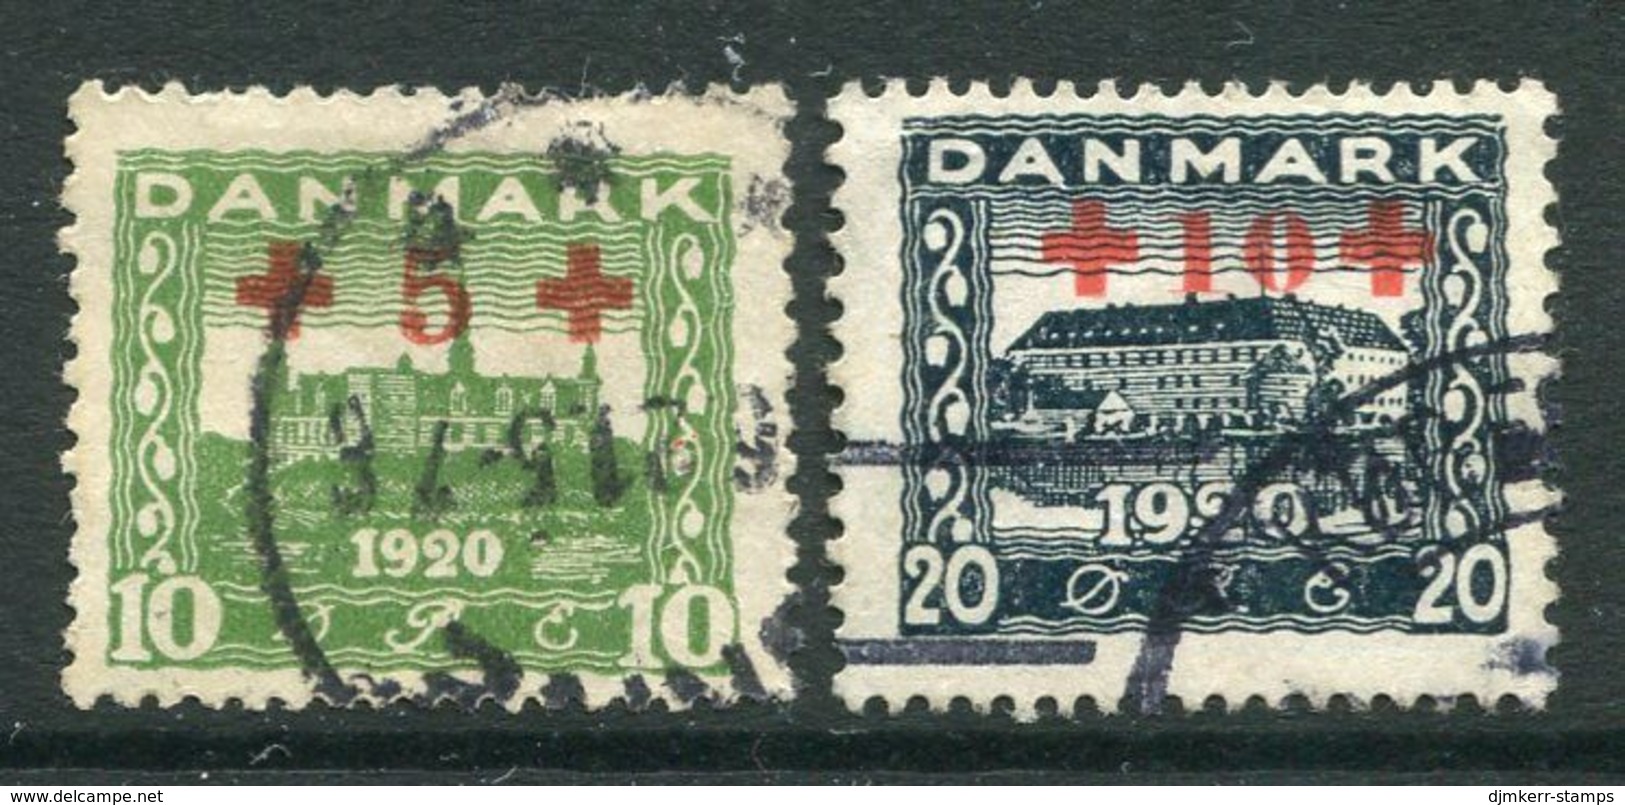 DENMARK 1921 Red Cross Surcharge Set, Used. Michel 116-17 - Oblitérés